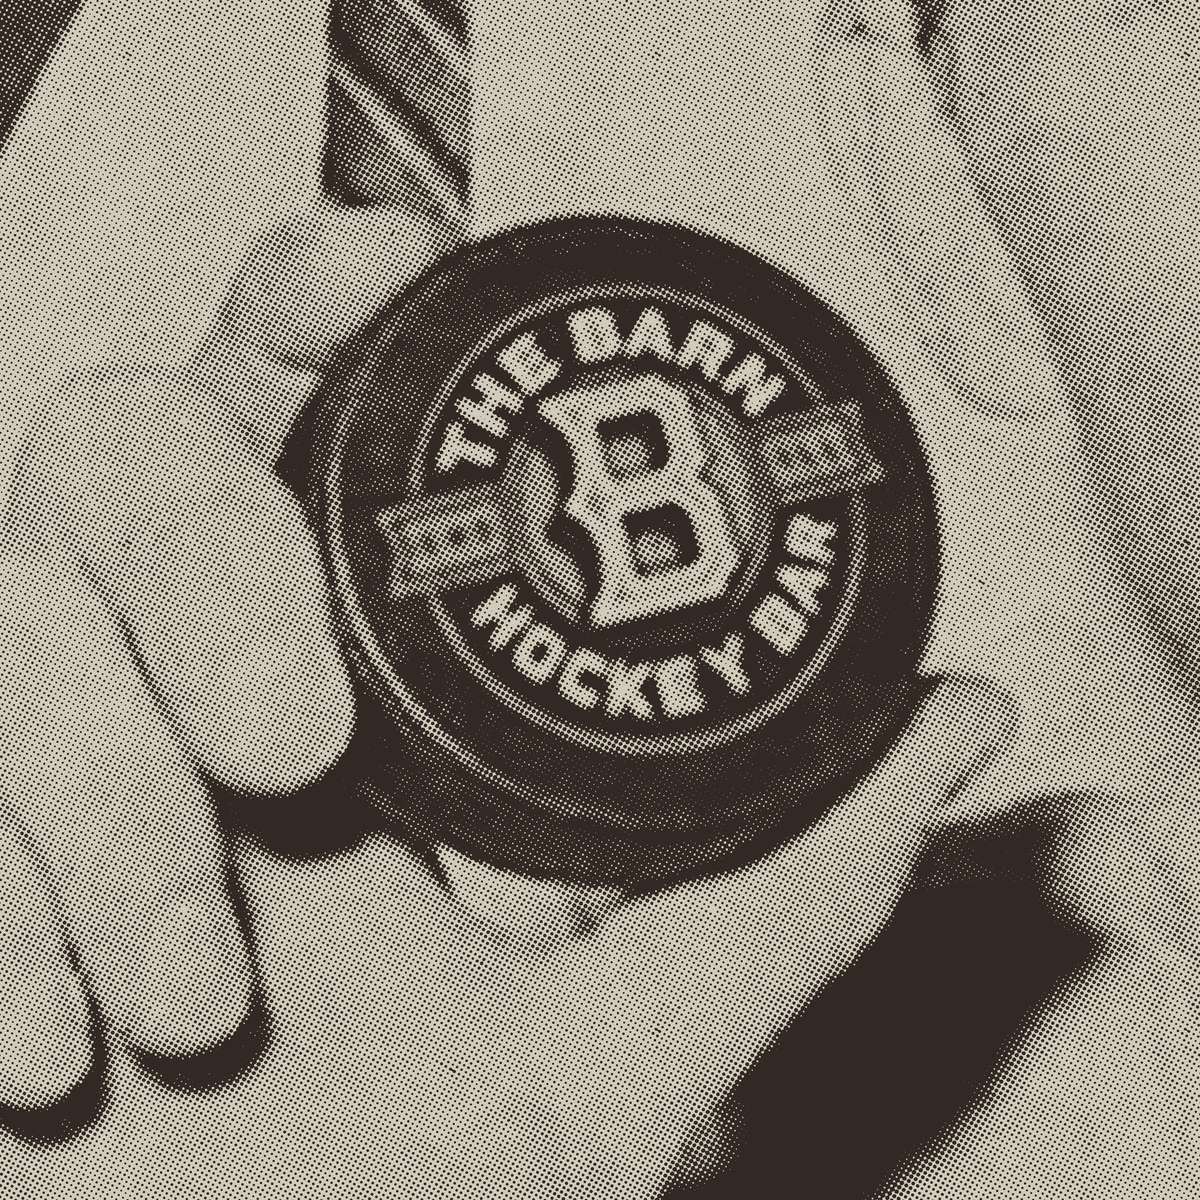 Old school hockey puck